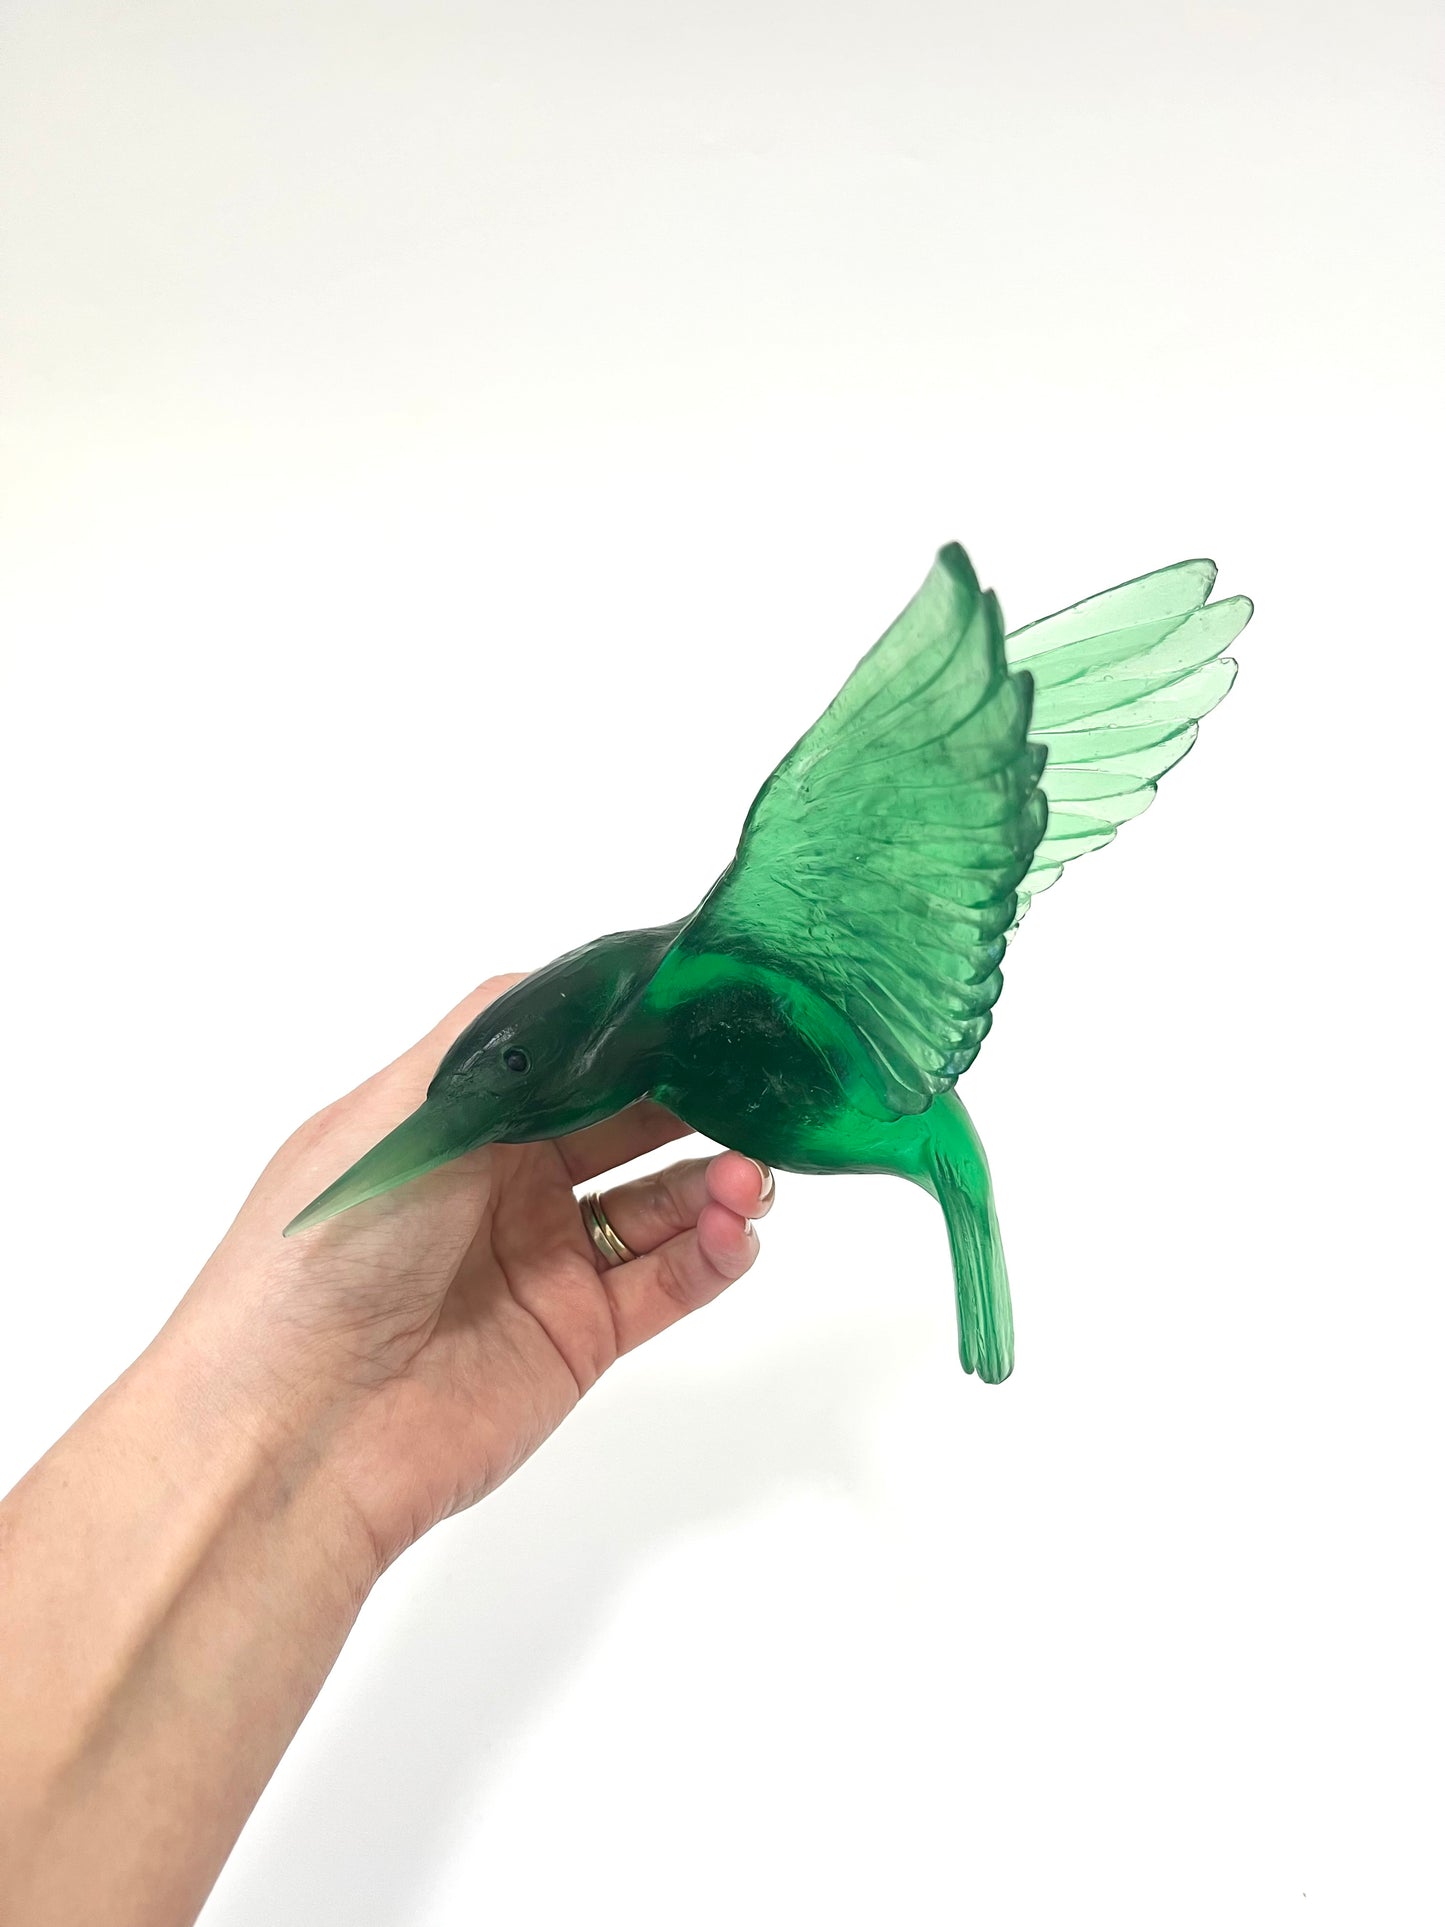 Kingfisher / Kōtare - Emerald